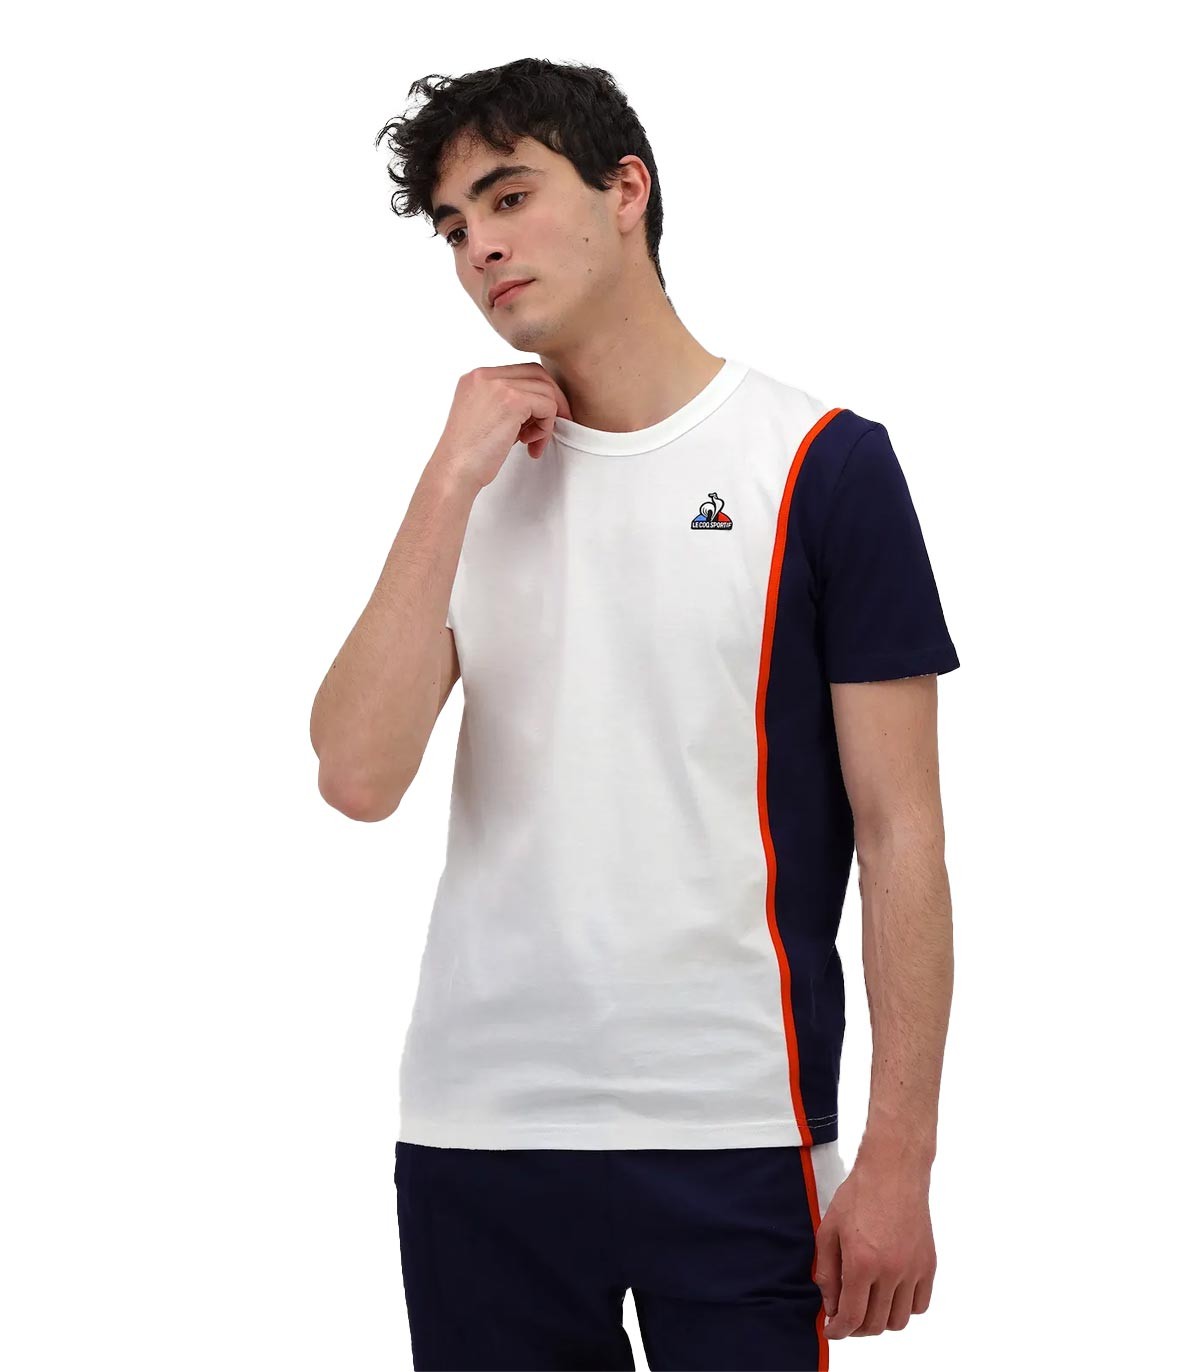 Le Coq Sportif - Camiseta Homme - Blanco